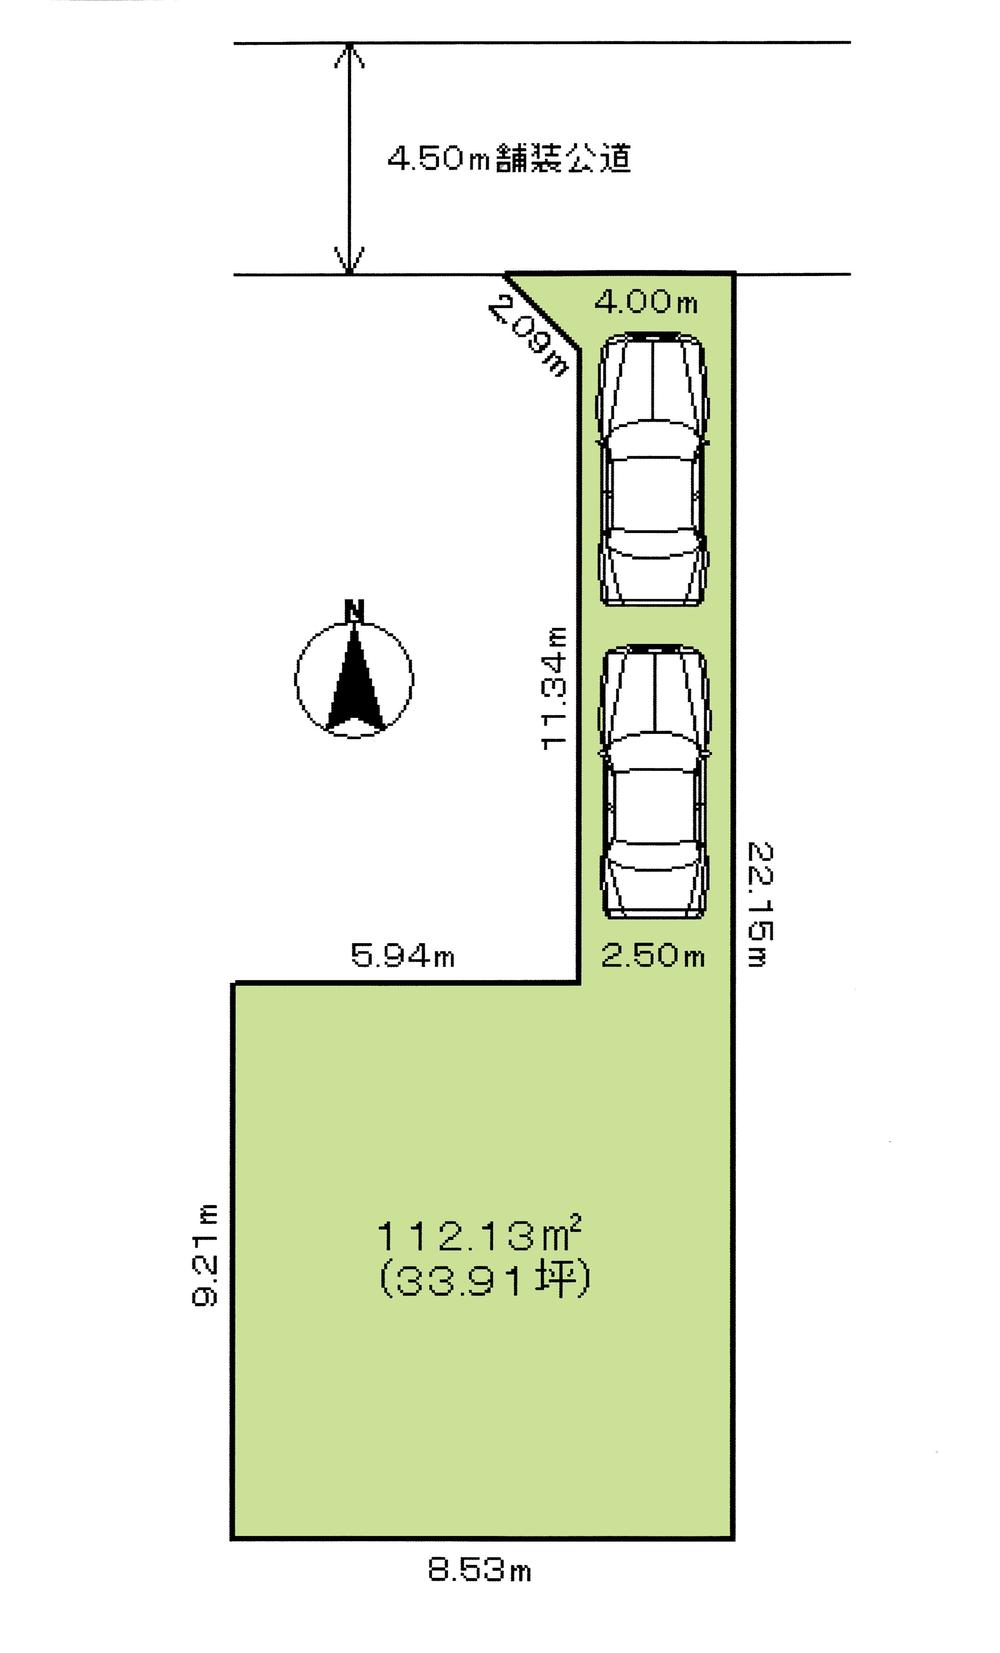 Compartment figure. Land price 4.8 million yen, Land area 112.13 sq m compartment view